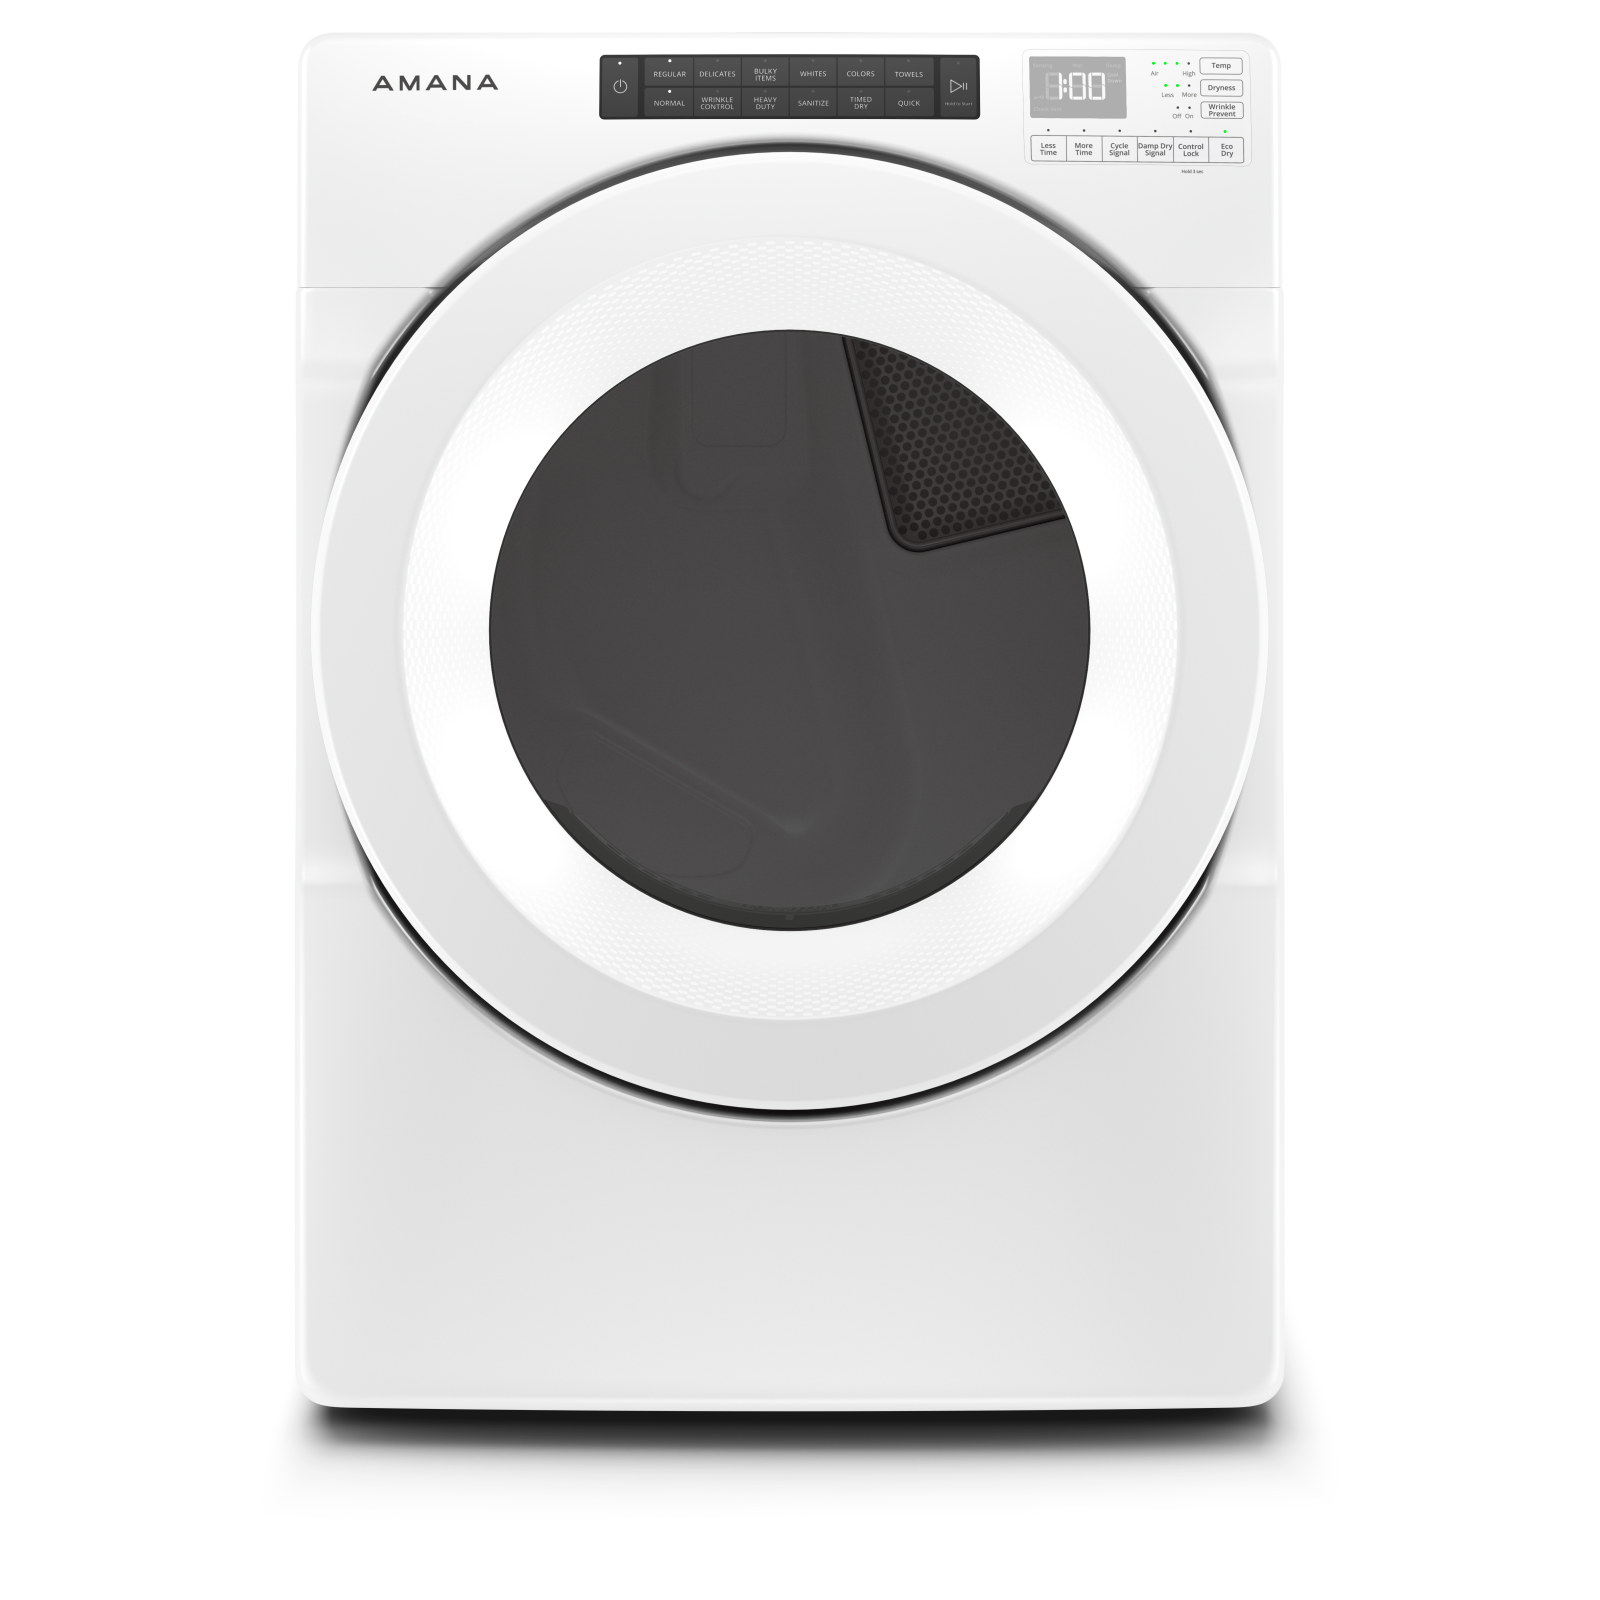 Amana - 7.4 cu. Ft  Electric Dryer in White - YNED5800HW